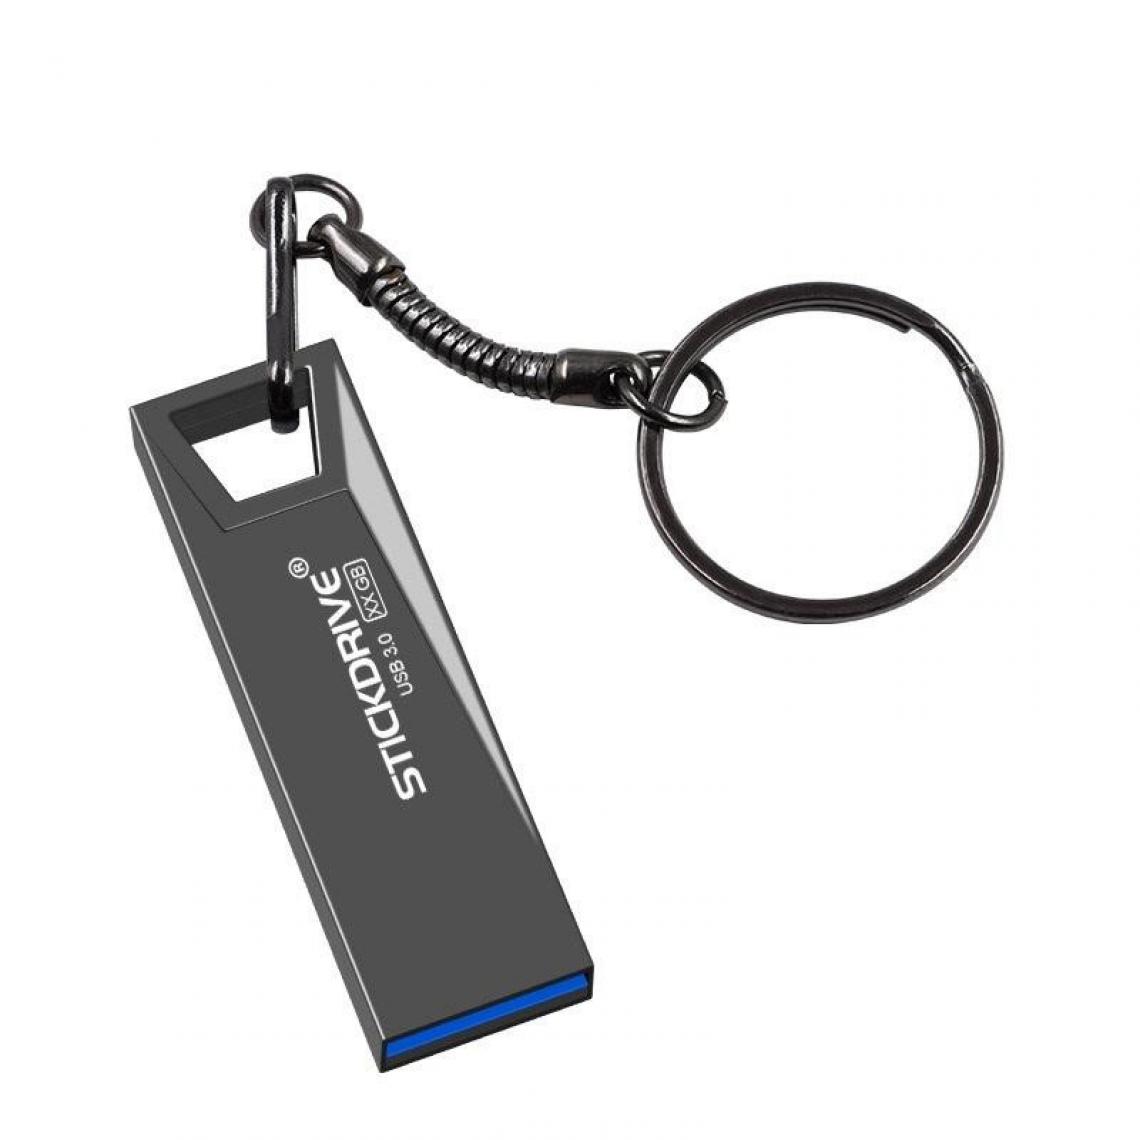 Wewoo - Clé USB STICKDRIVE 32 Go USB 3.0 haute vitesse Mini disque U en métal noir - Clés USB